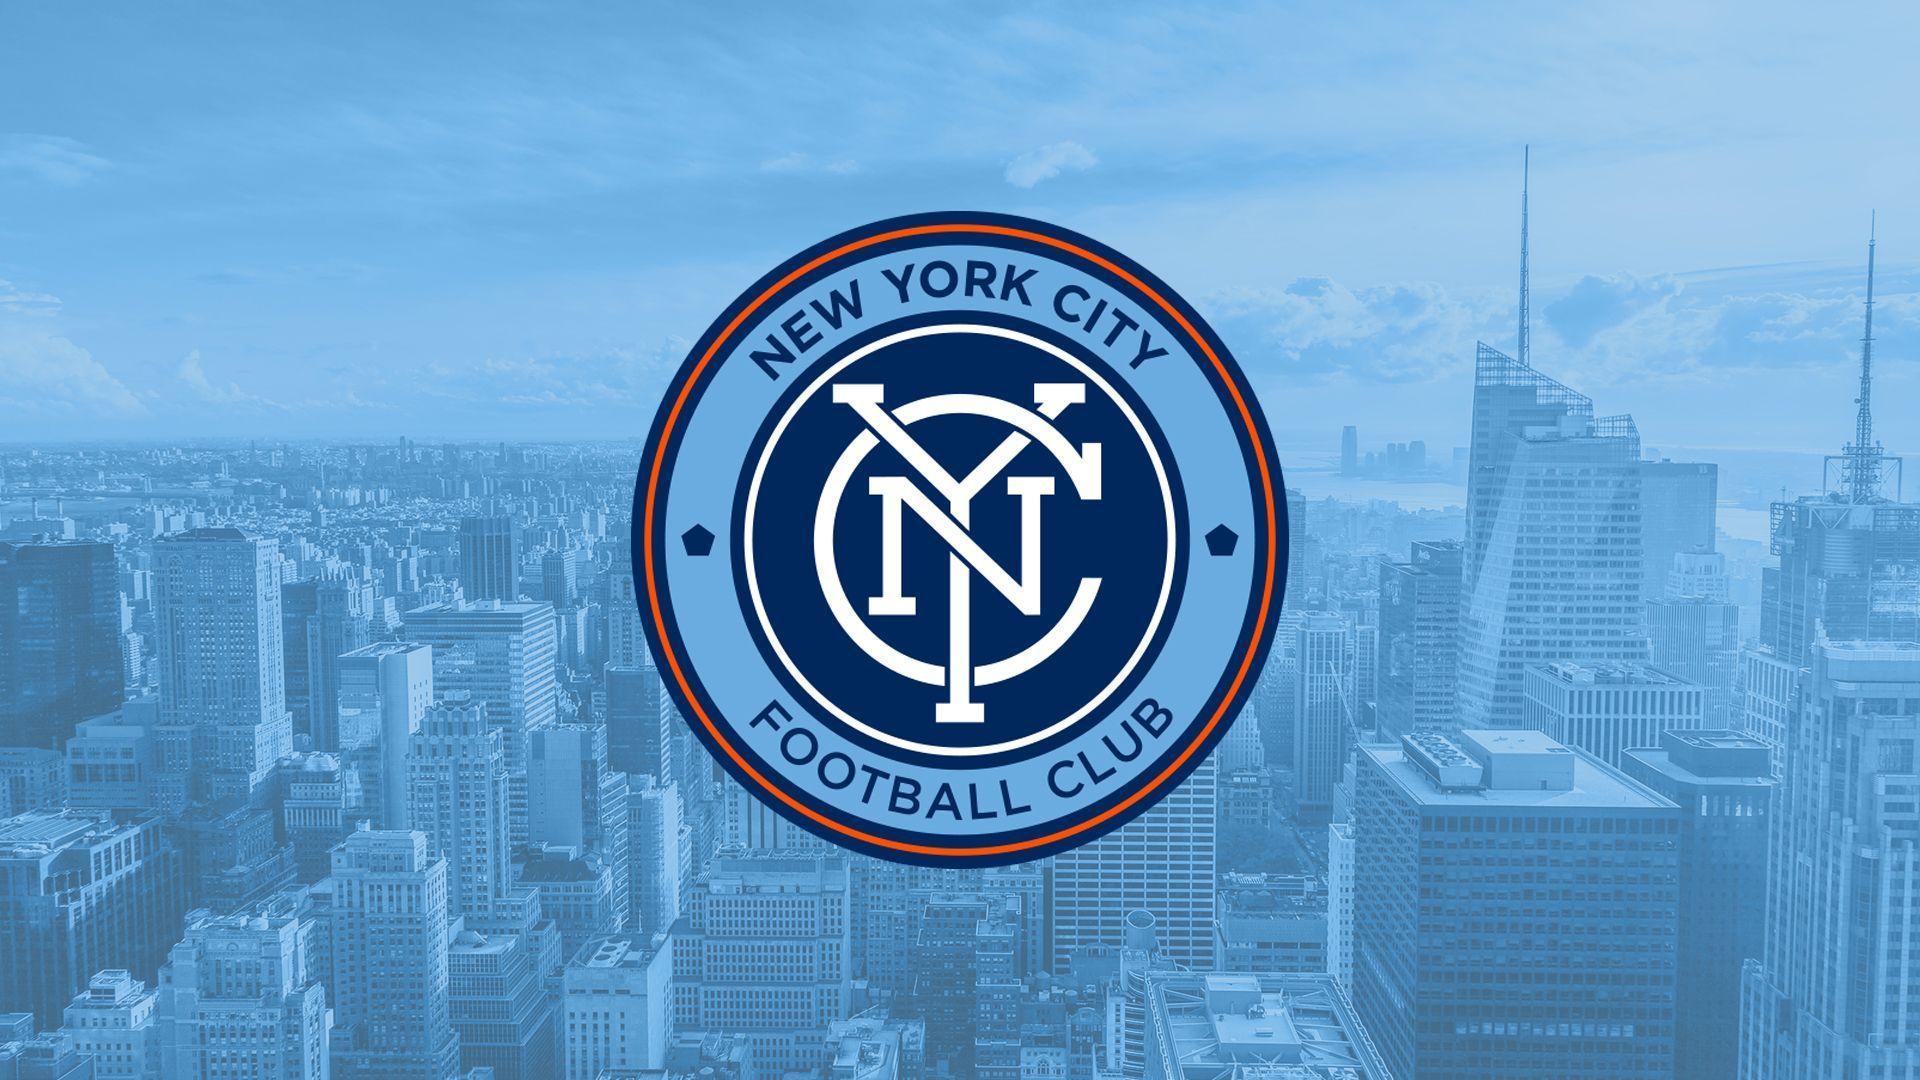 New York City FC Background & Wallpaper. New York City FC